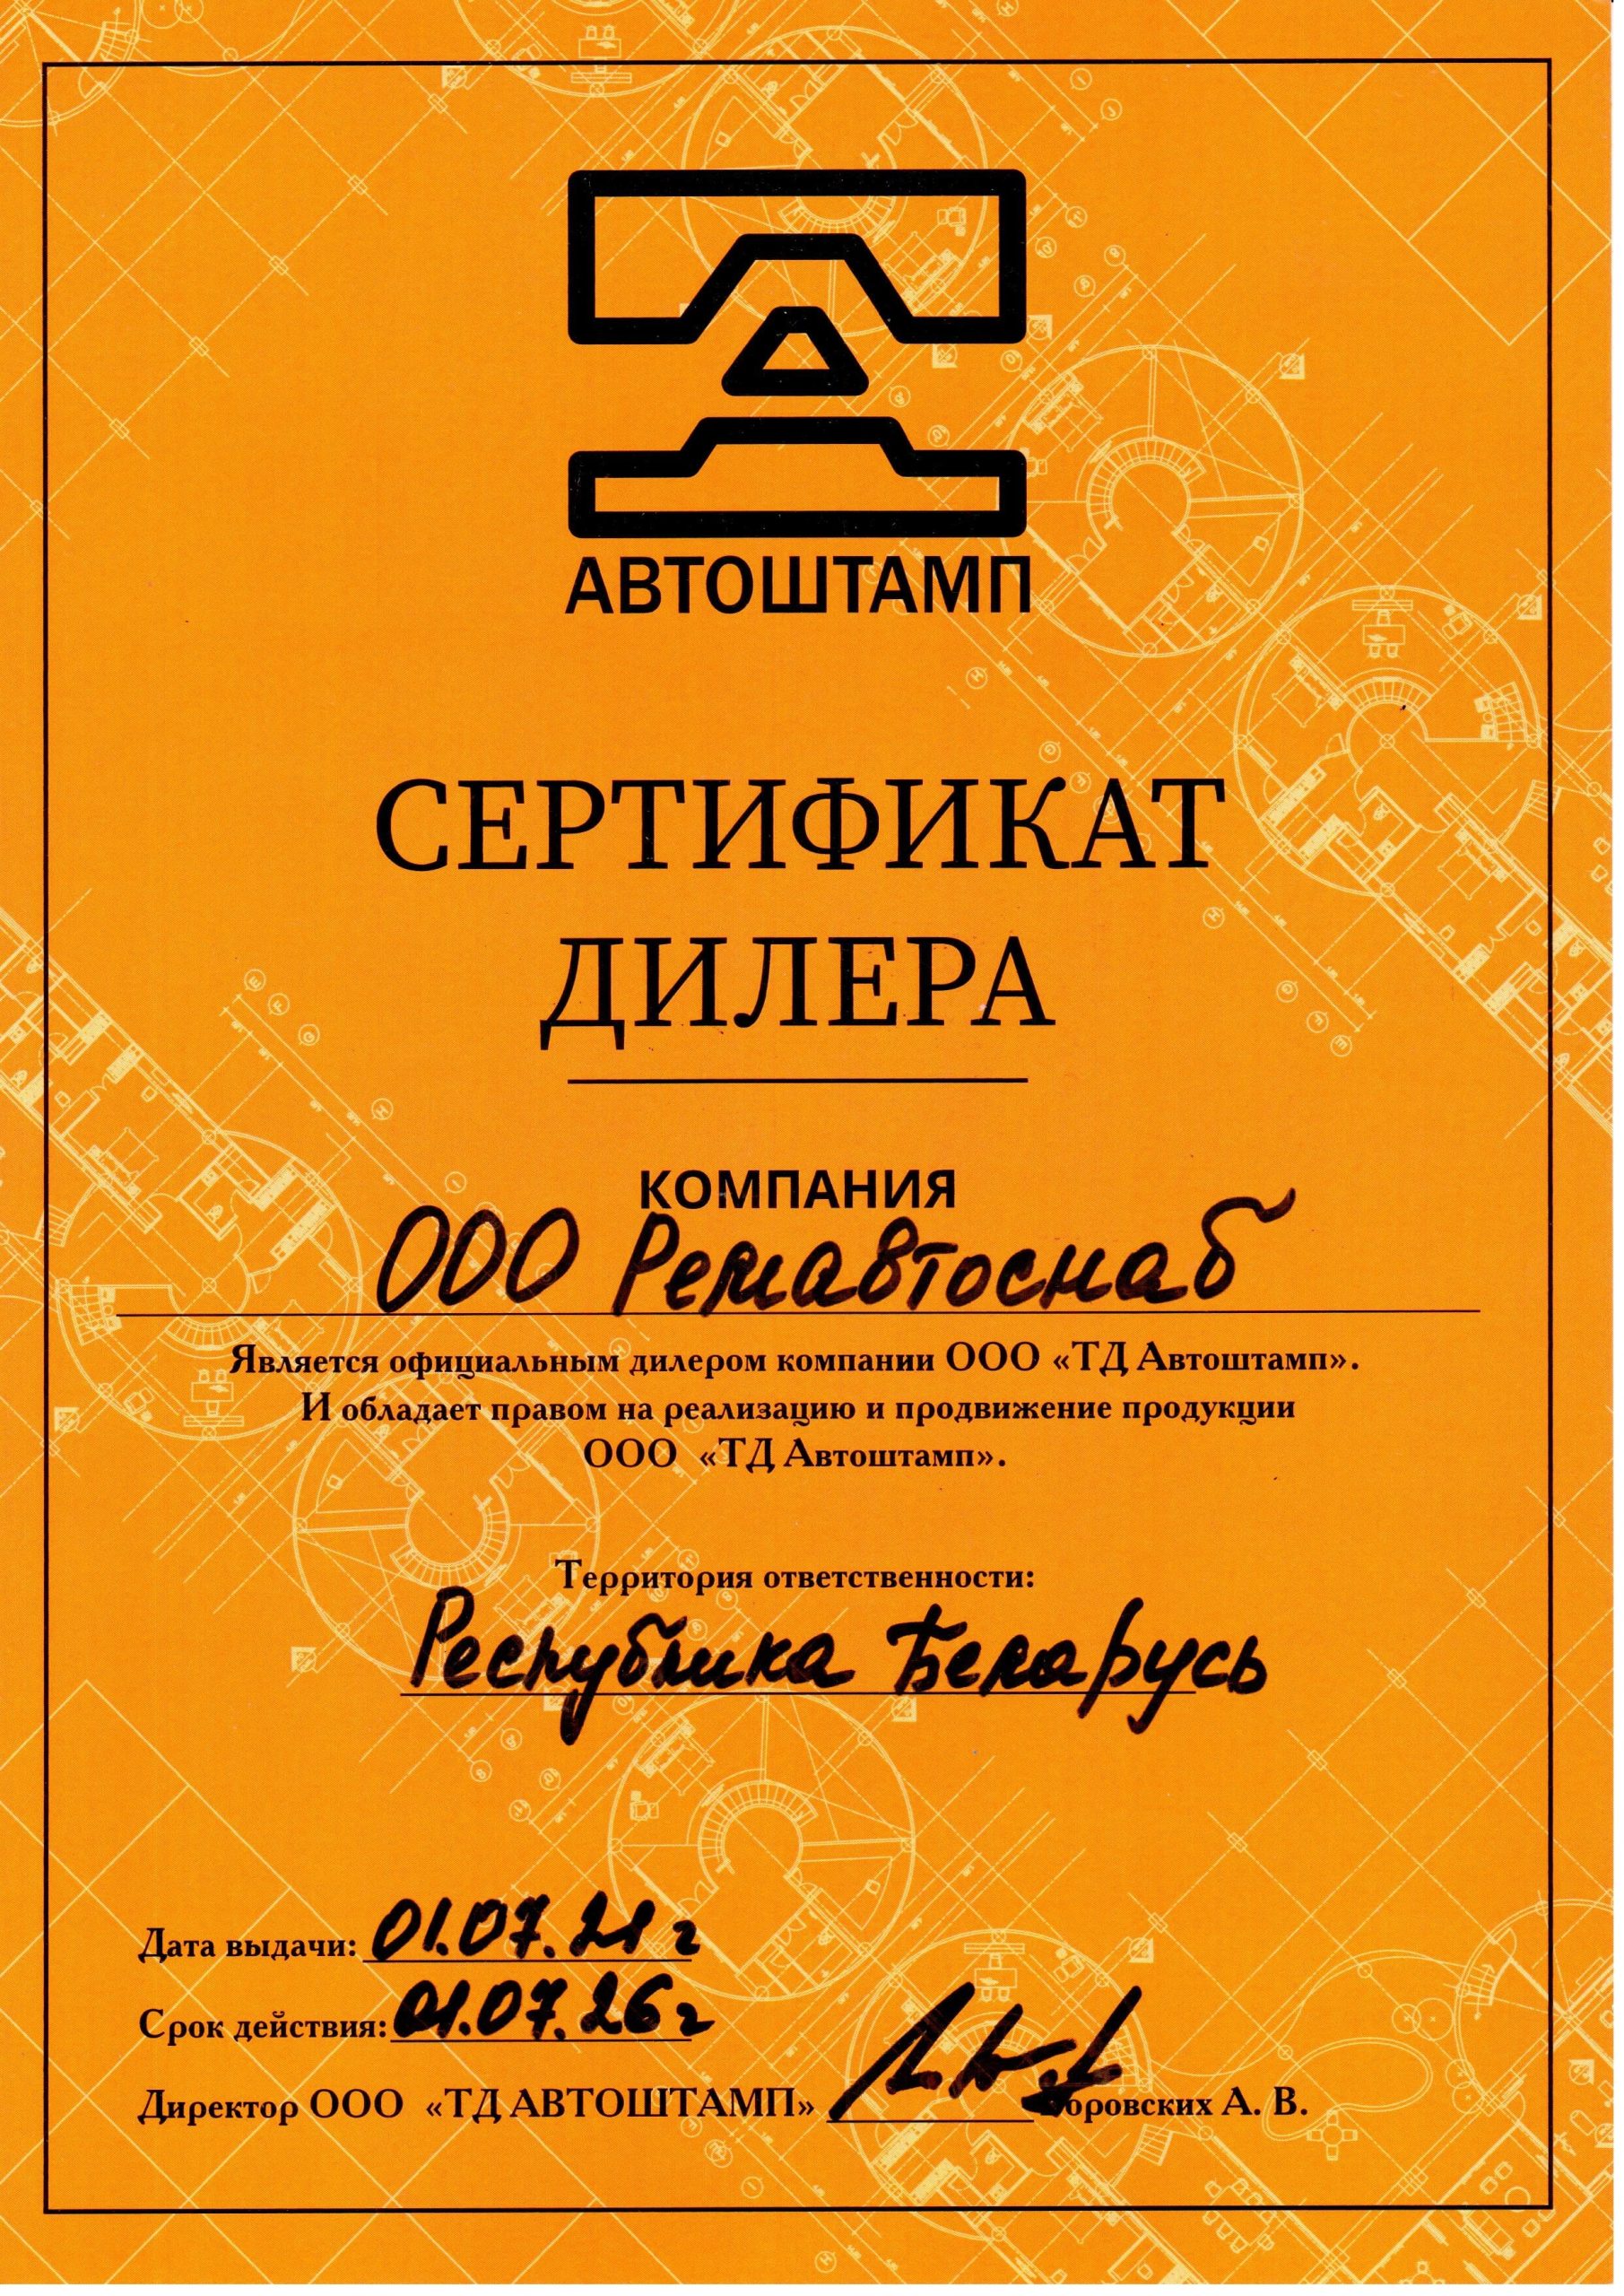 Сертификат дилера ТД Автоштамп